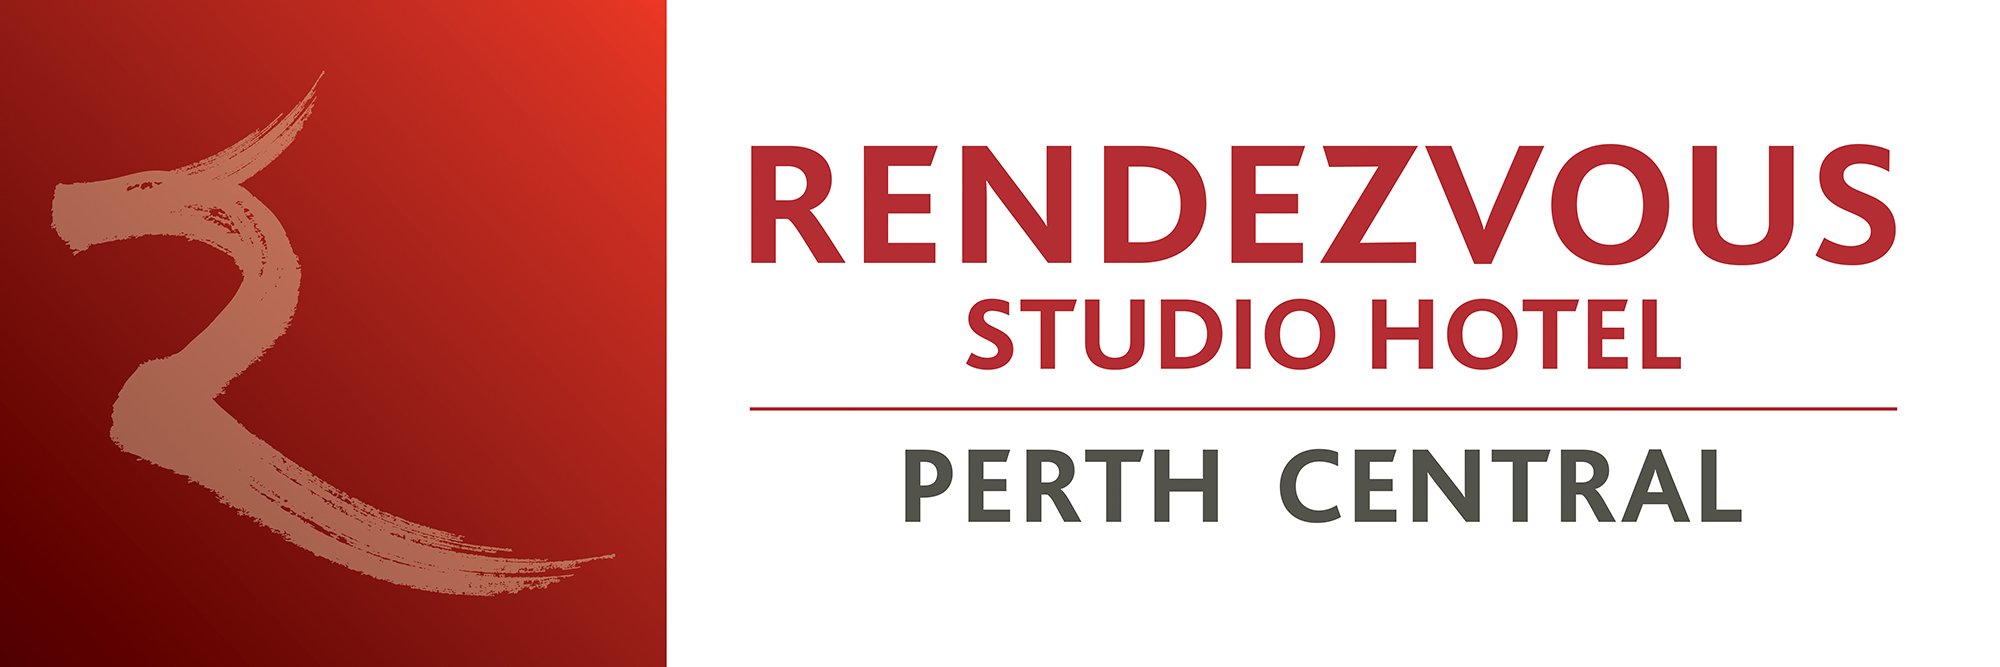 Rendezvous Studio Hotel Perth Central